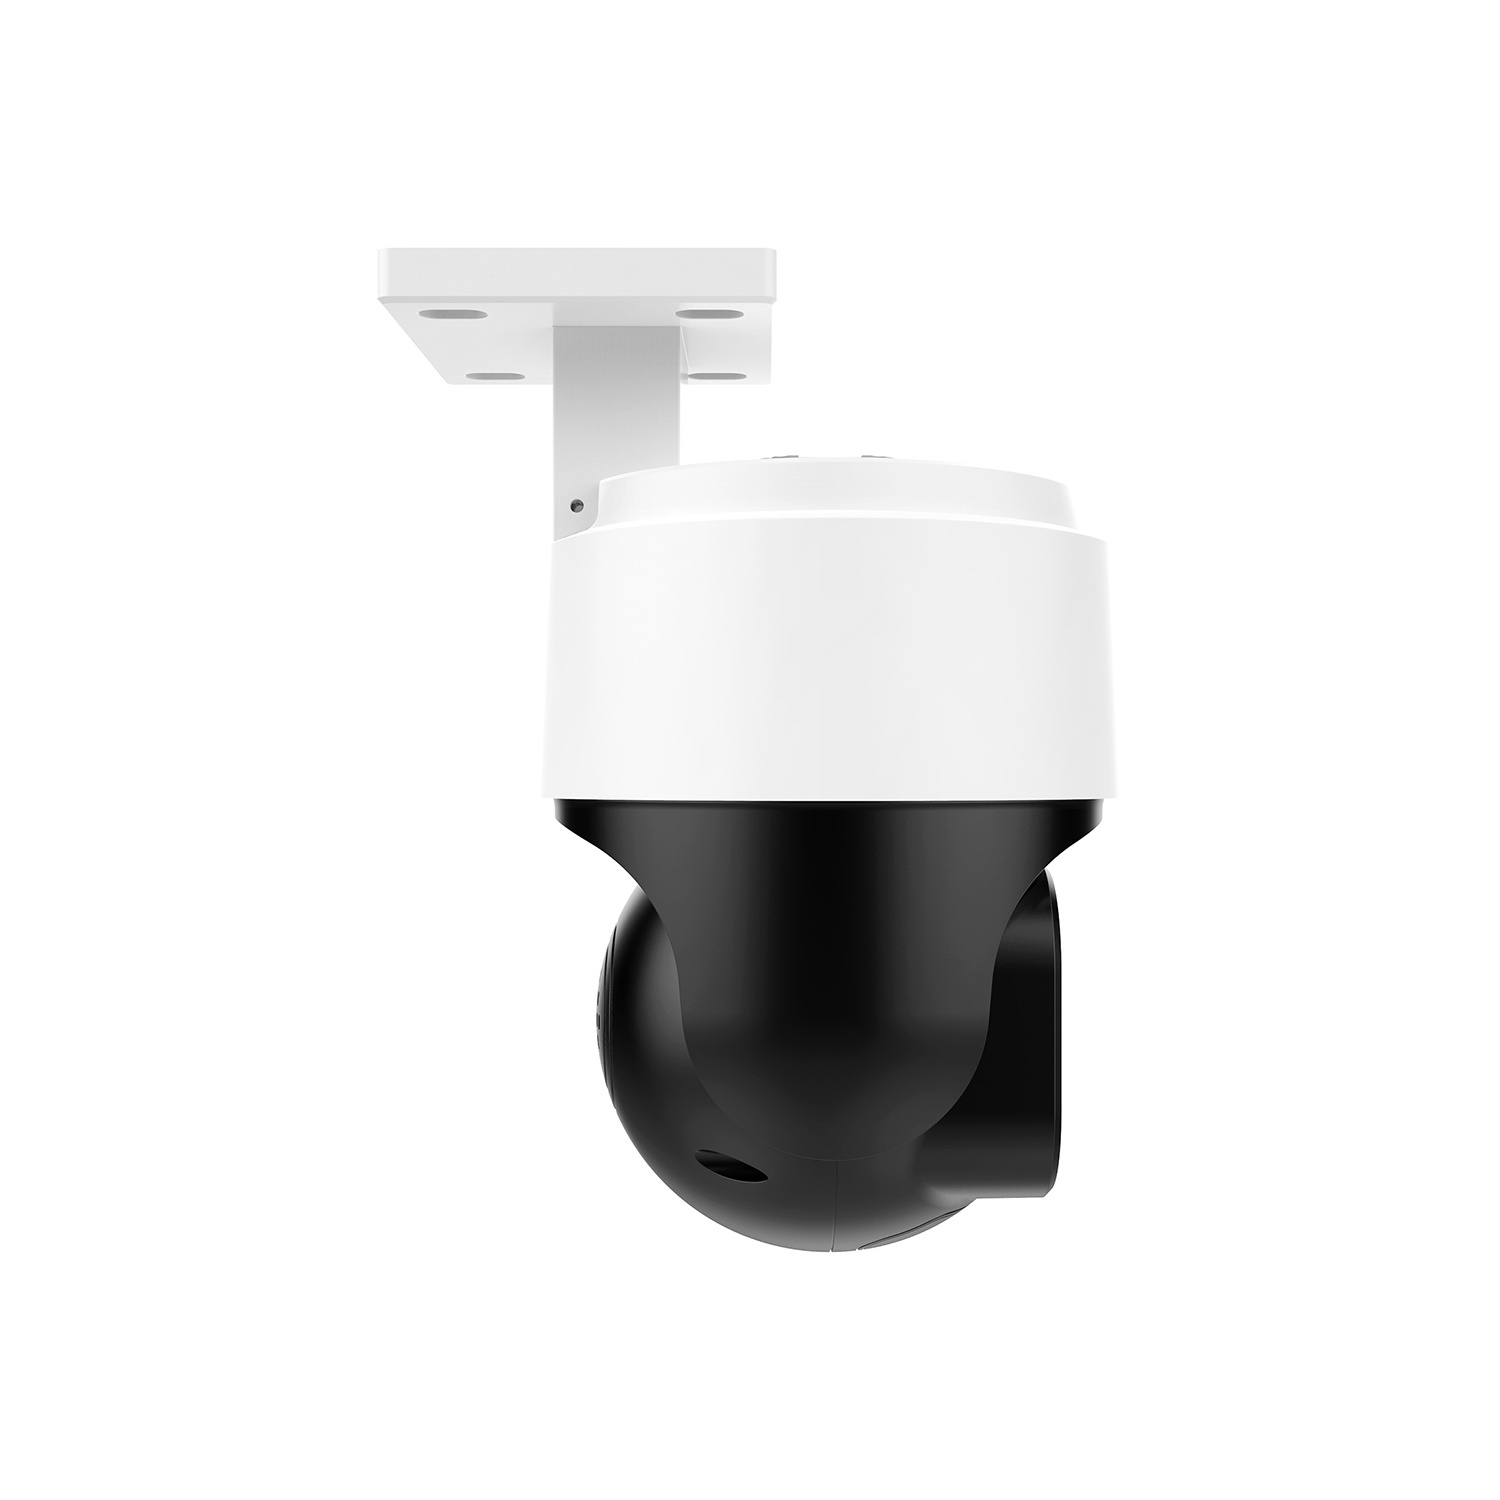 5MP Hisee X Outdoor Wireless Surveillance PTZ IP Camera